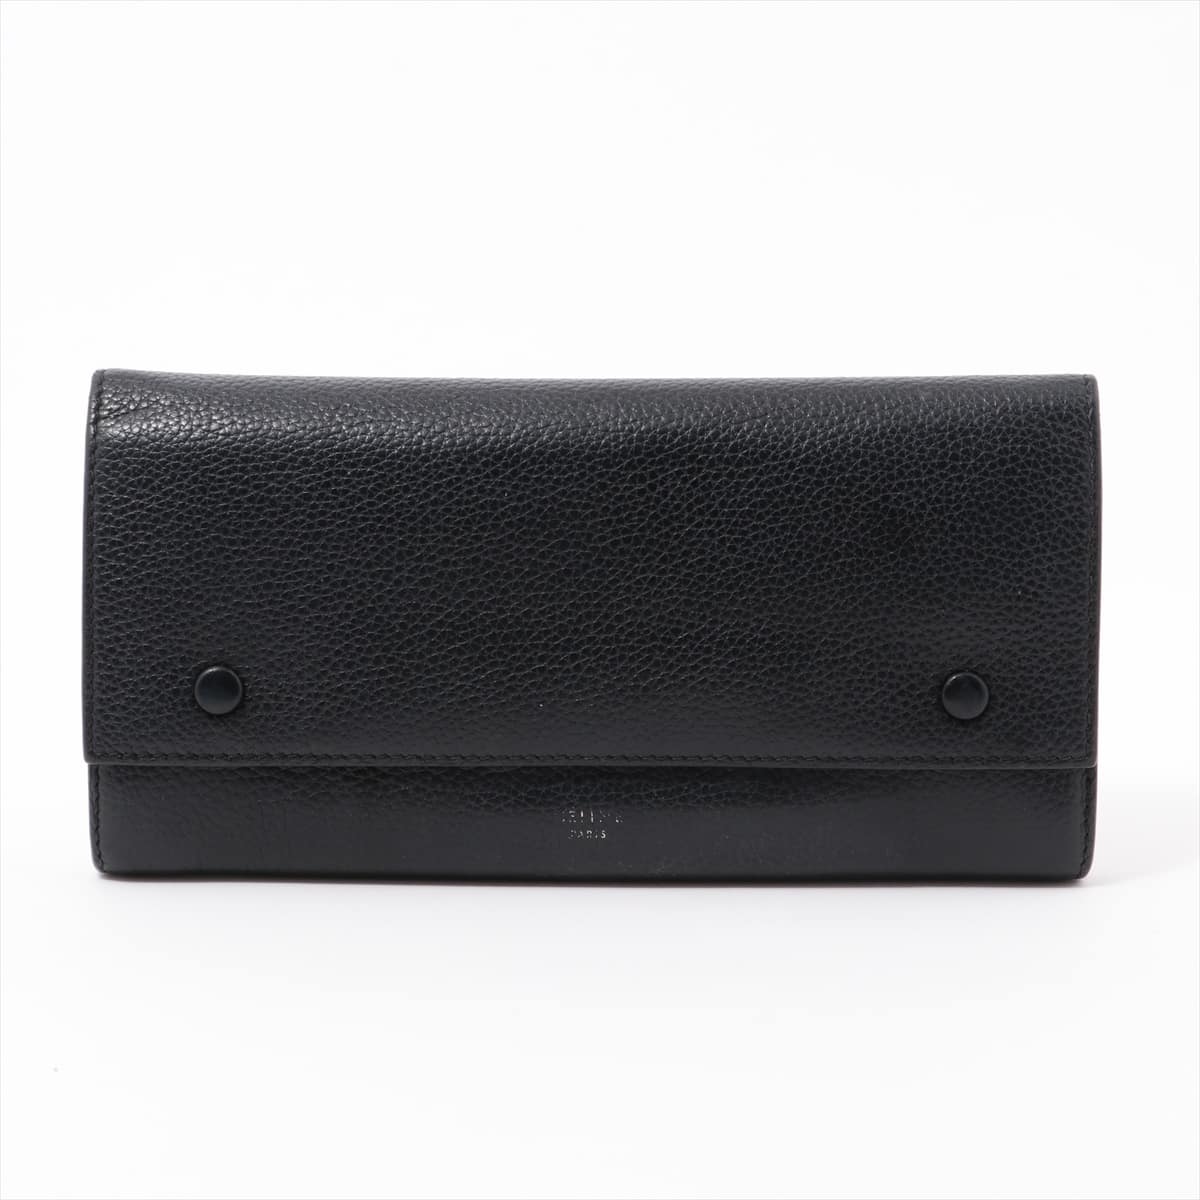 CELINE Large Flap Multi Function Leather Wallet Black